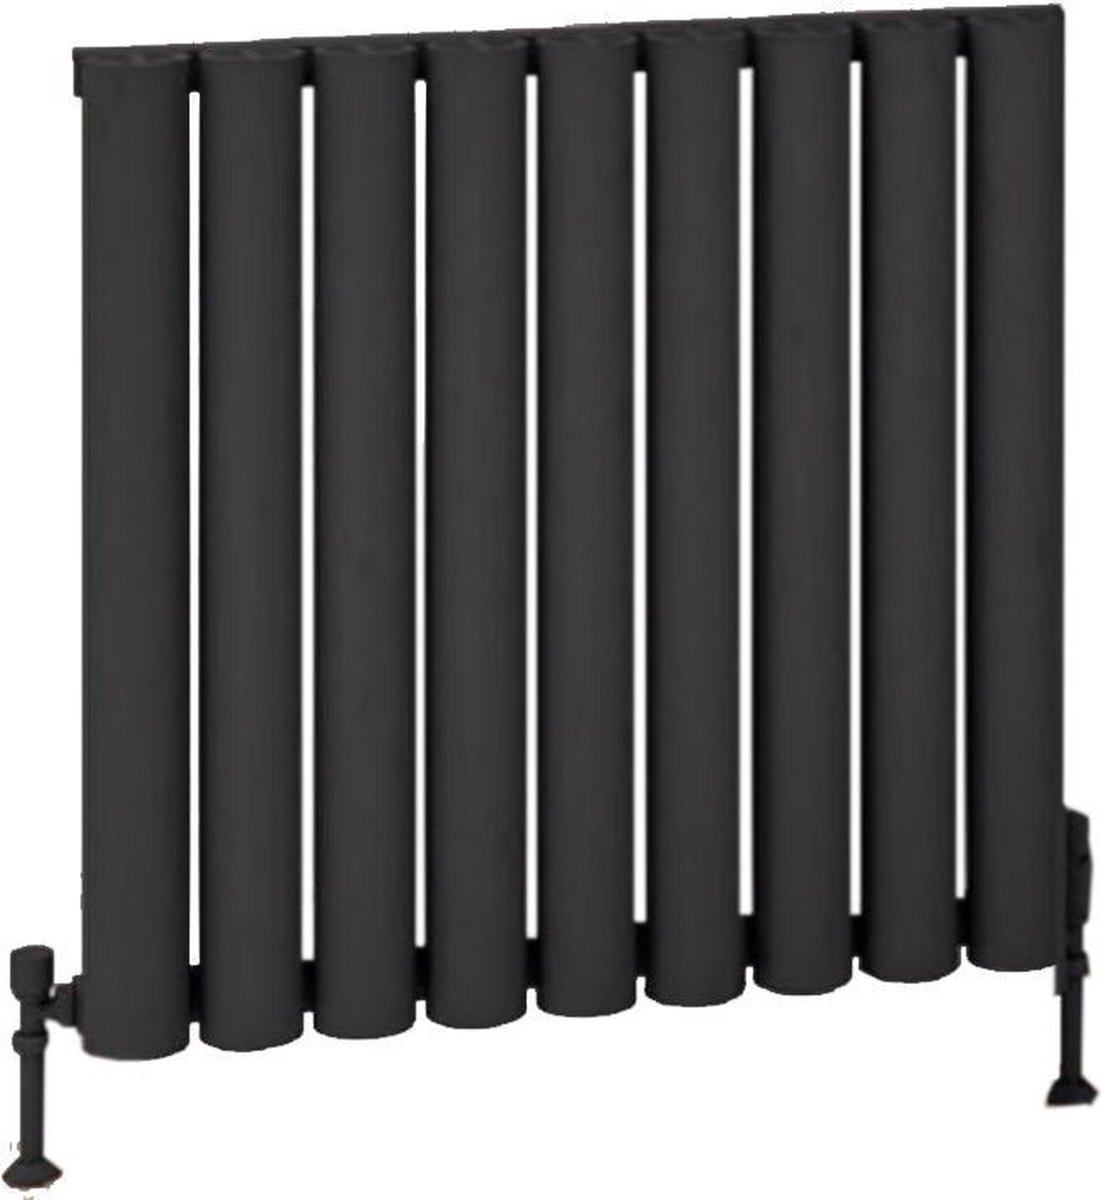 Design radiator horizontaal aluminium mat antraciet 60x62,5cm 1188 watt - Eastbrook Burford